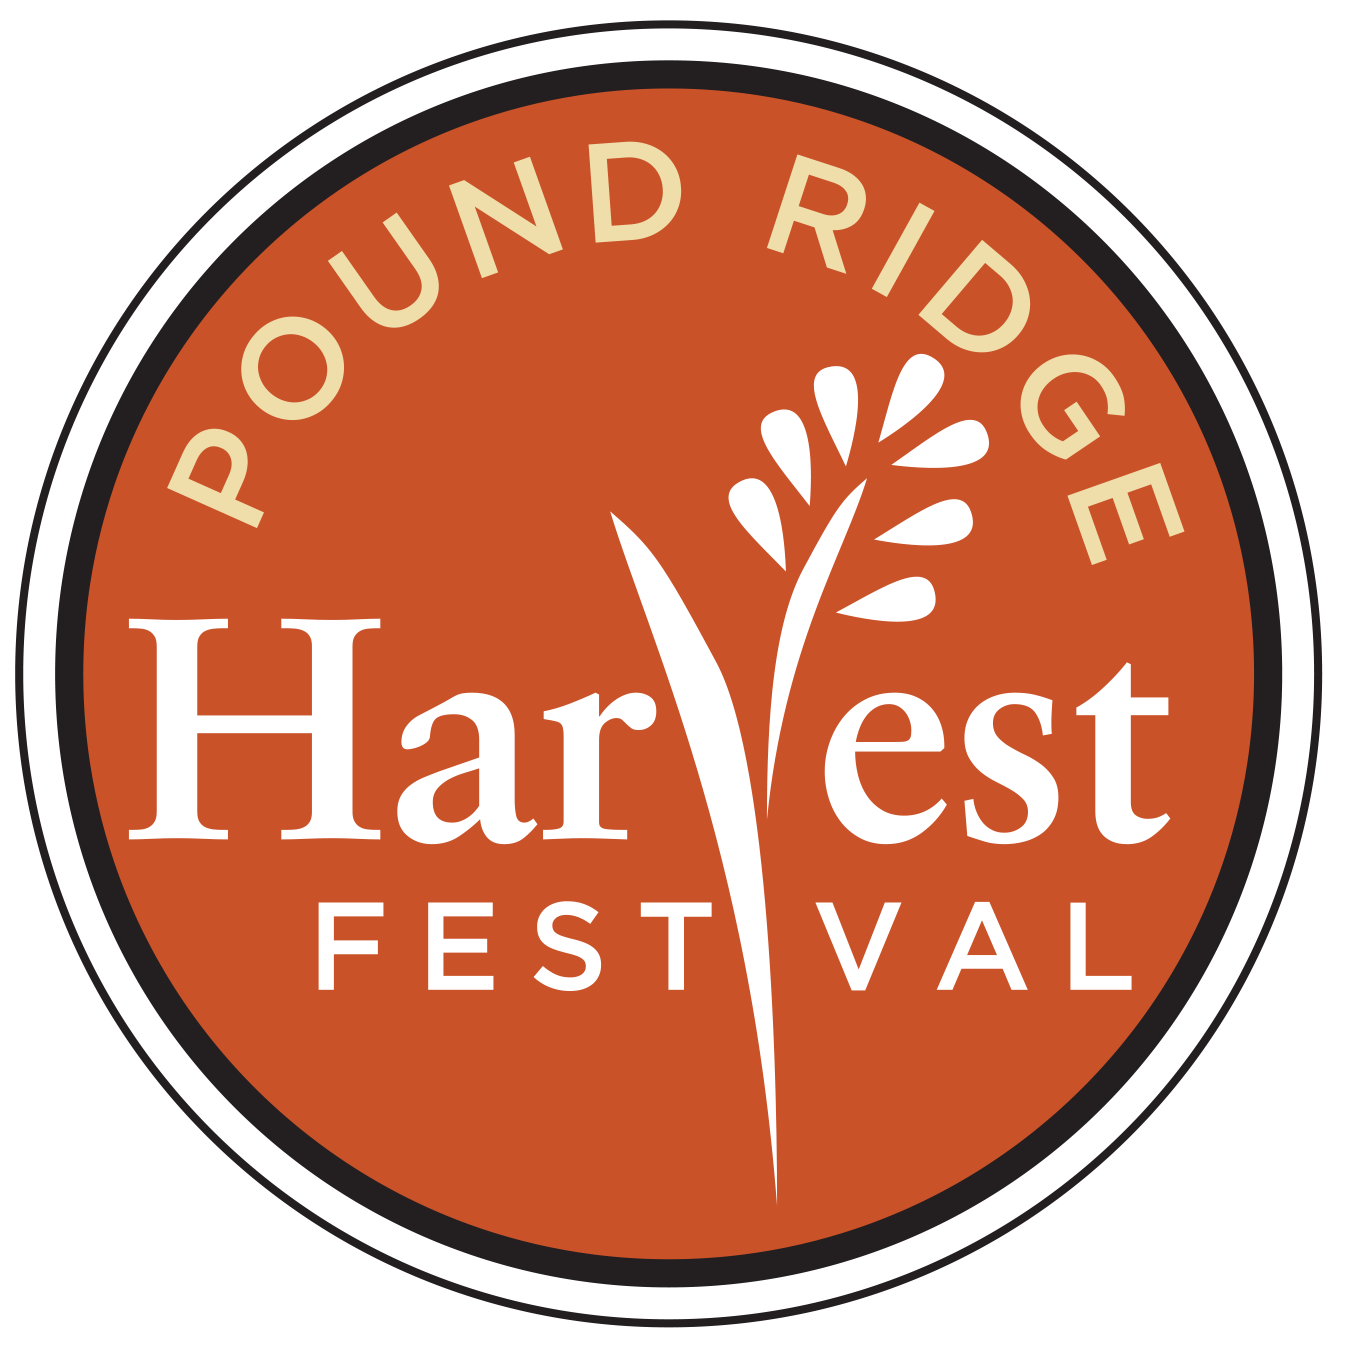 Pound Ridge Harvest Festival